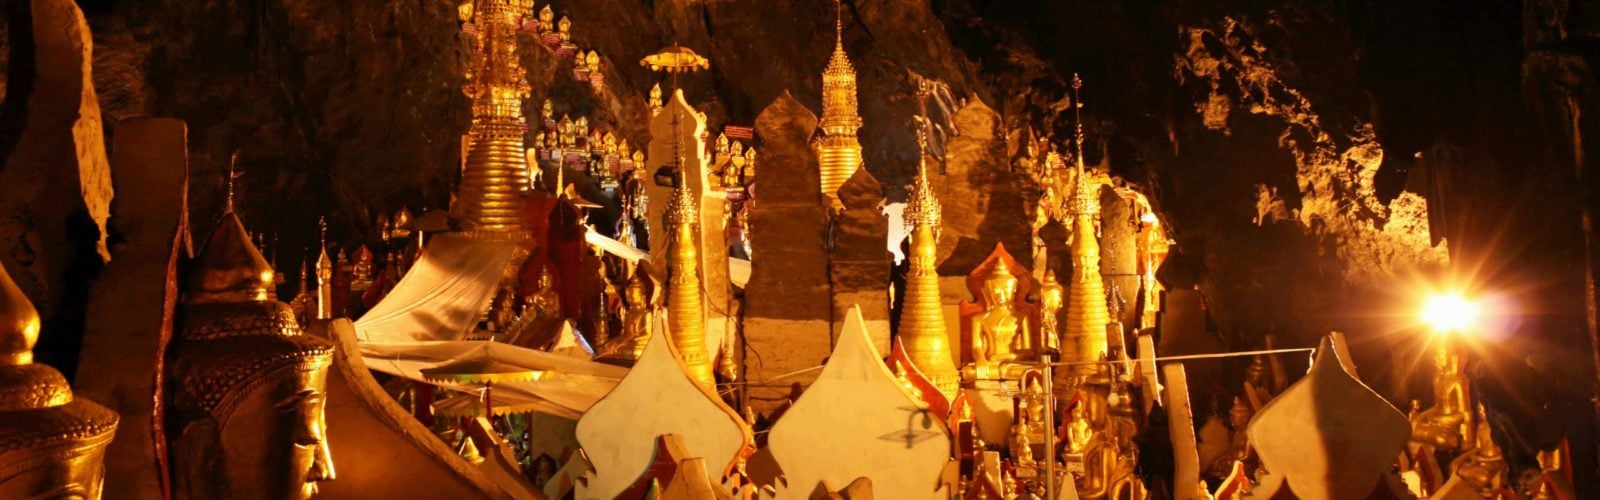 Thousand Buddha cave, Pindaya, Myanmar